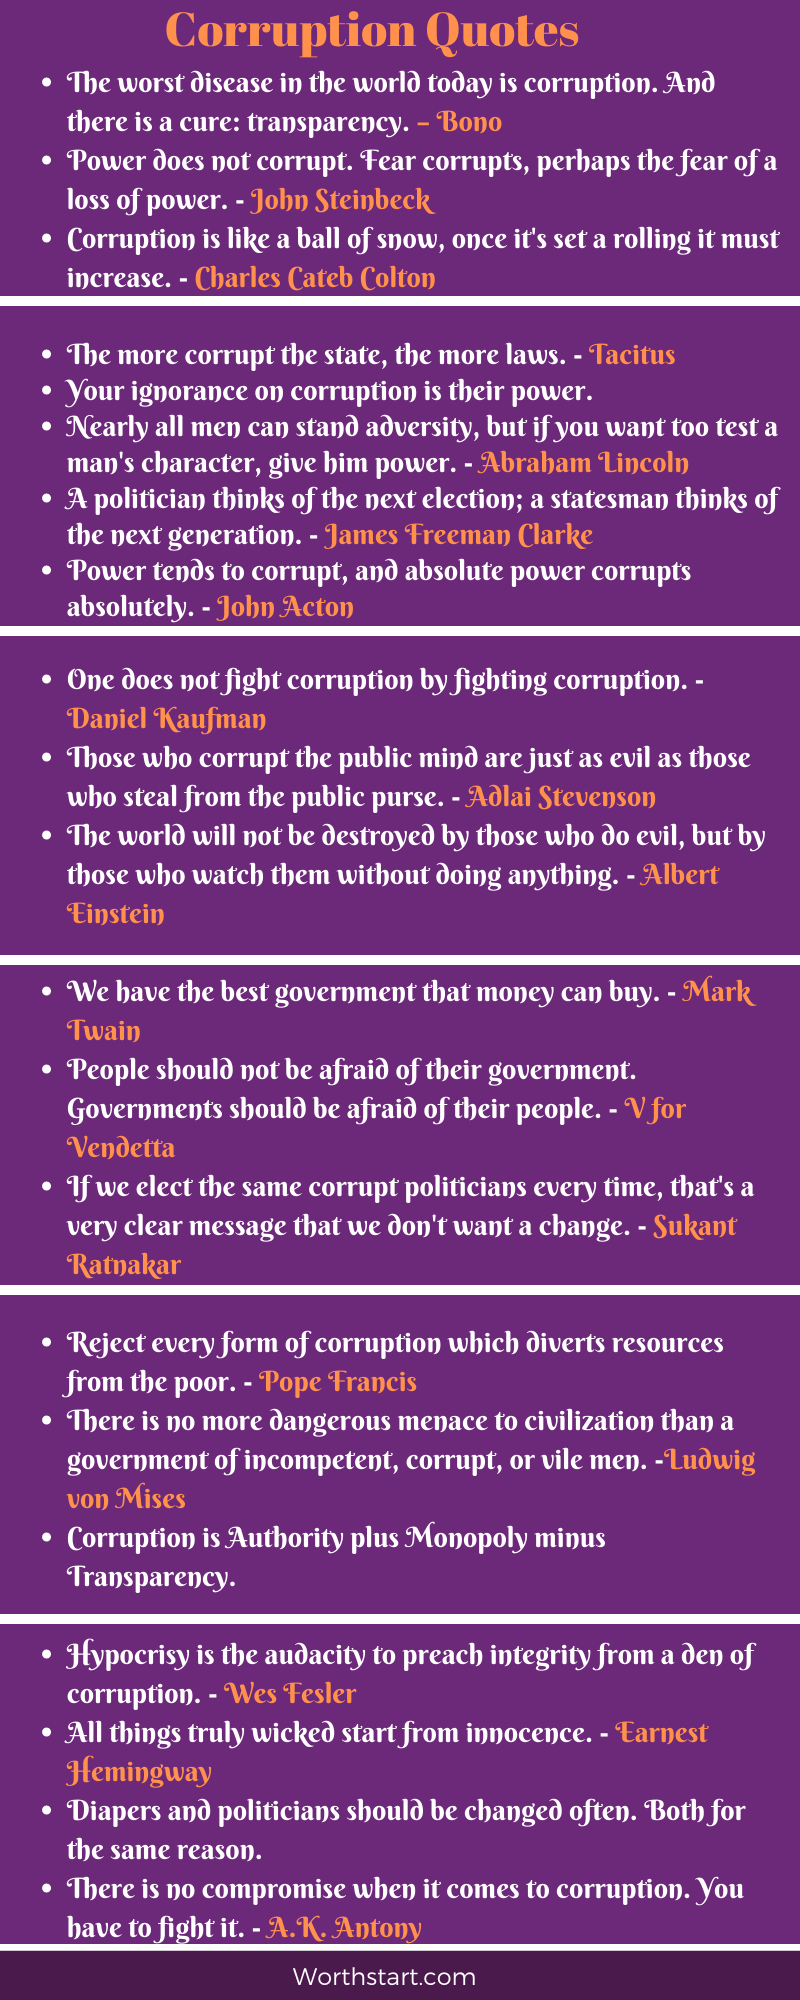 Corruption Quotes and Anti-Corruption Slogans